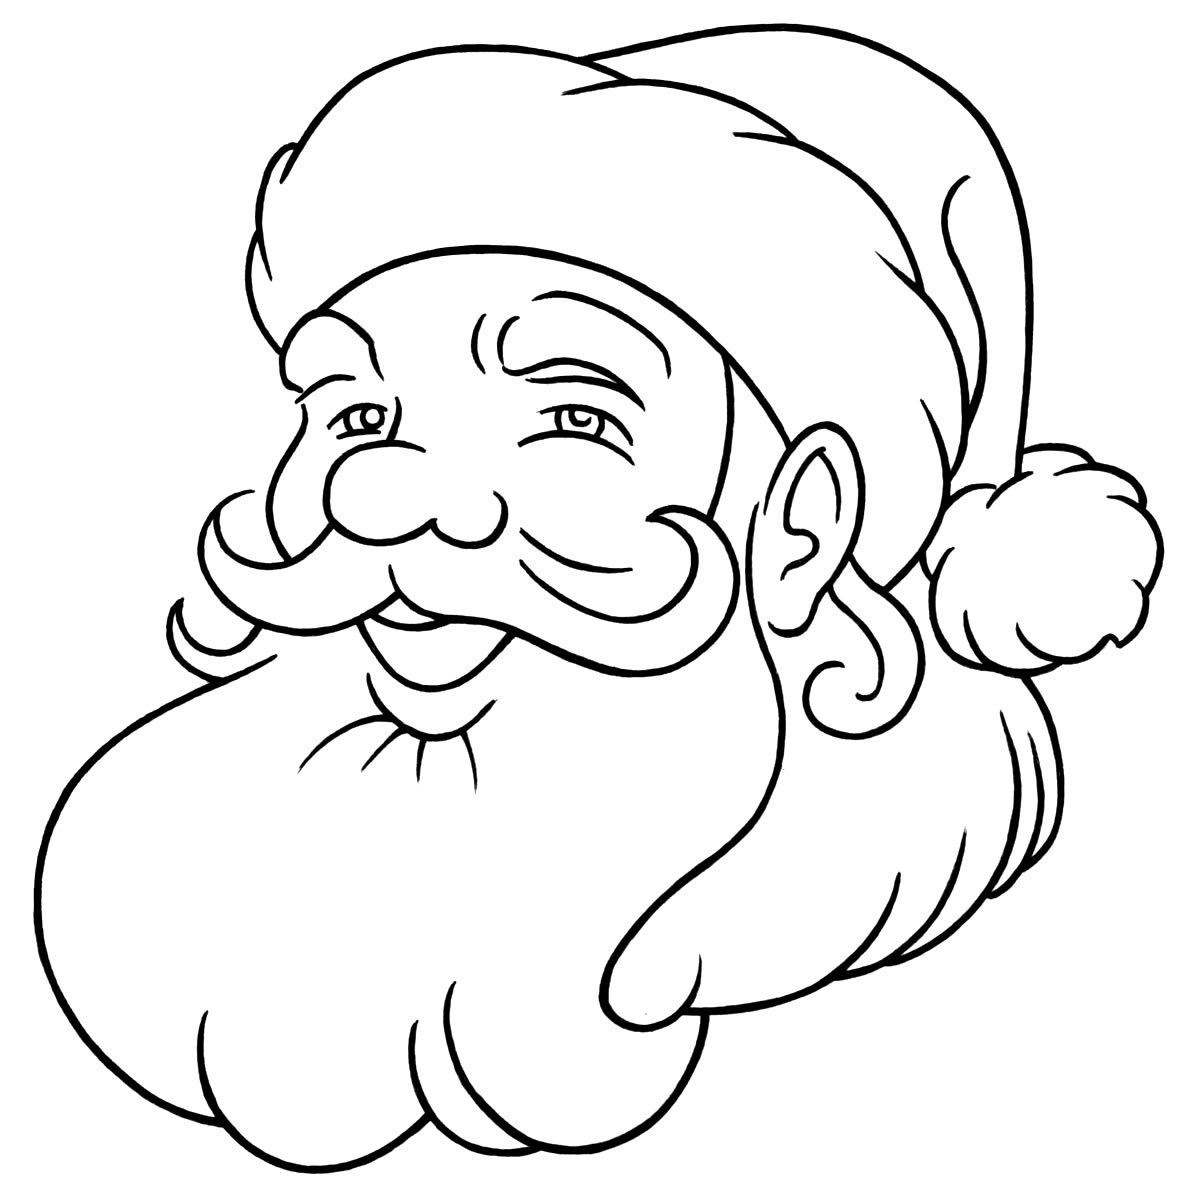 Desenho fofo do Papai Noel para pintar